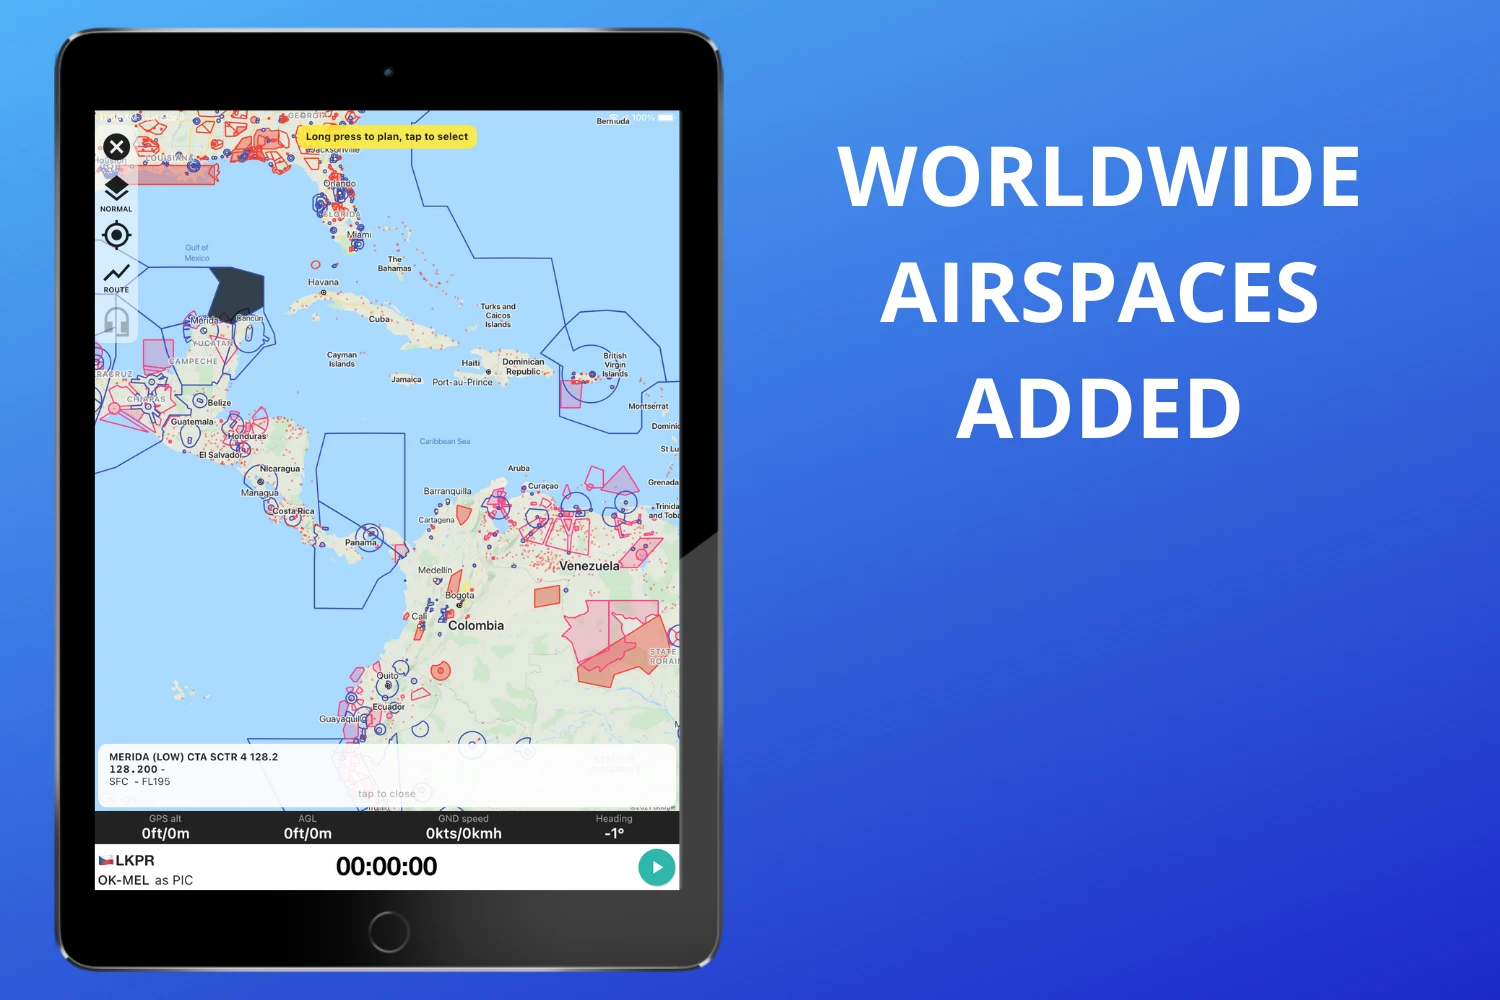 Worldwide airspaces